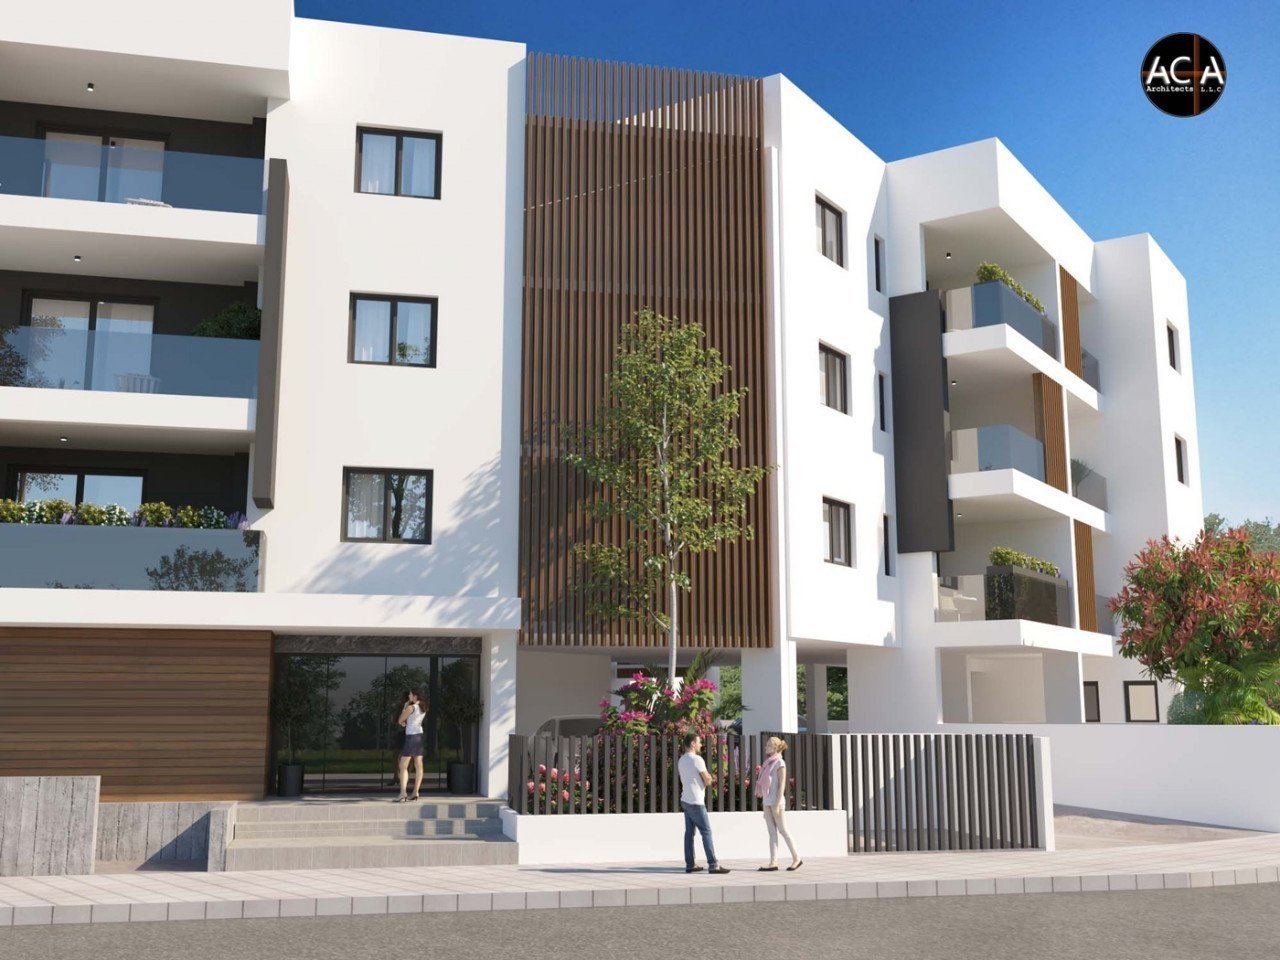 For Sale: Apartment (Flat) in Aglantzia, Nicosia for Rent | Key Realtor Cyprus